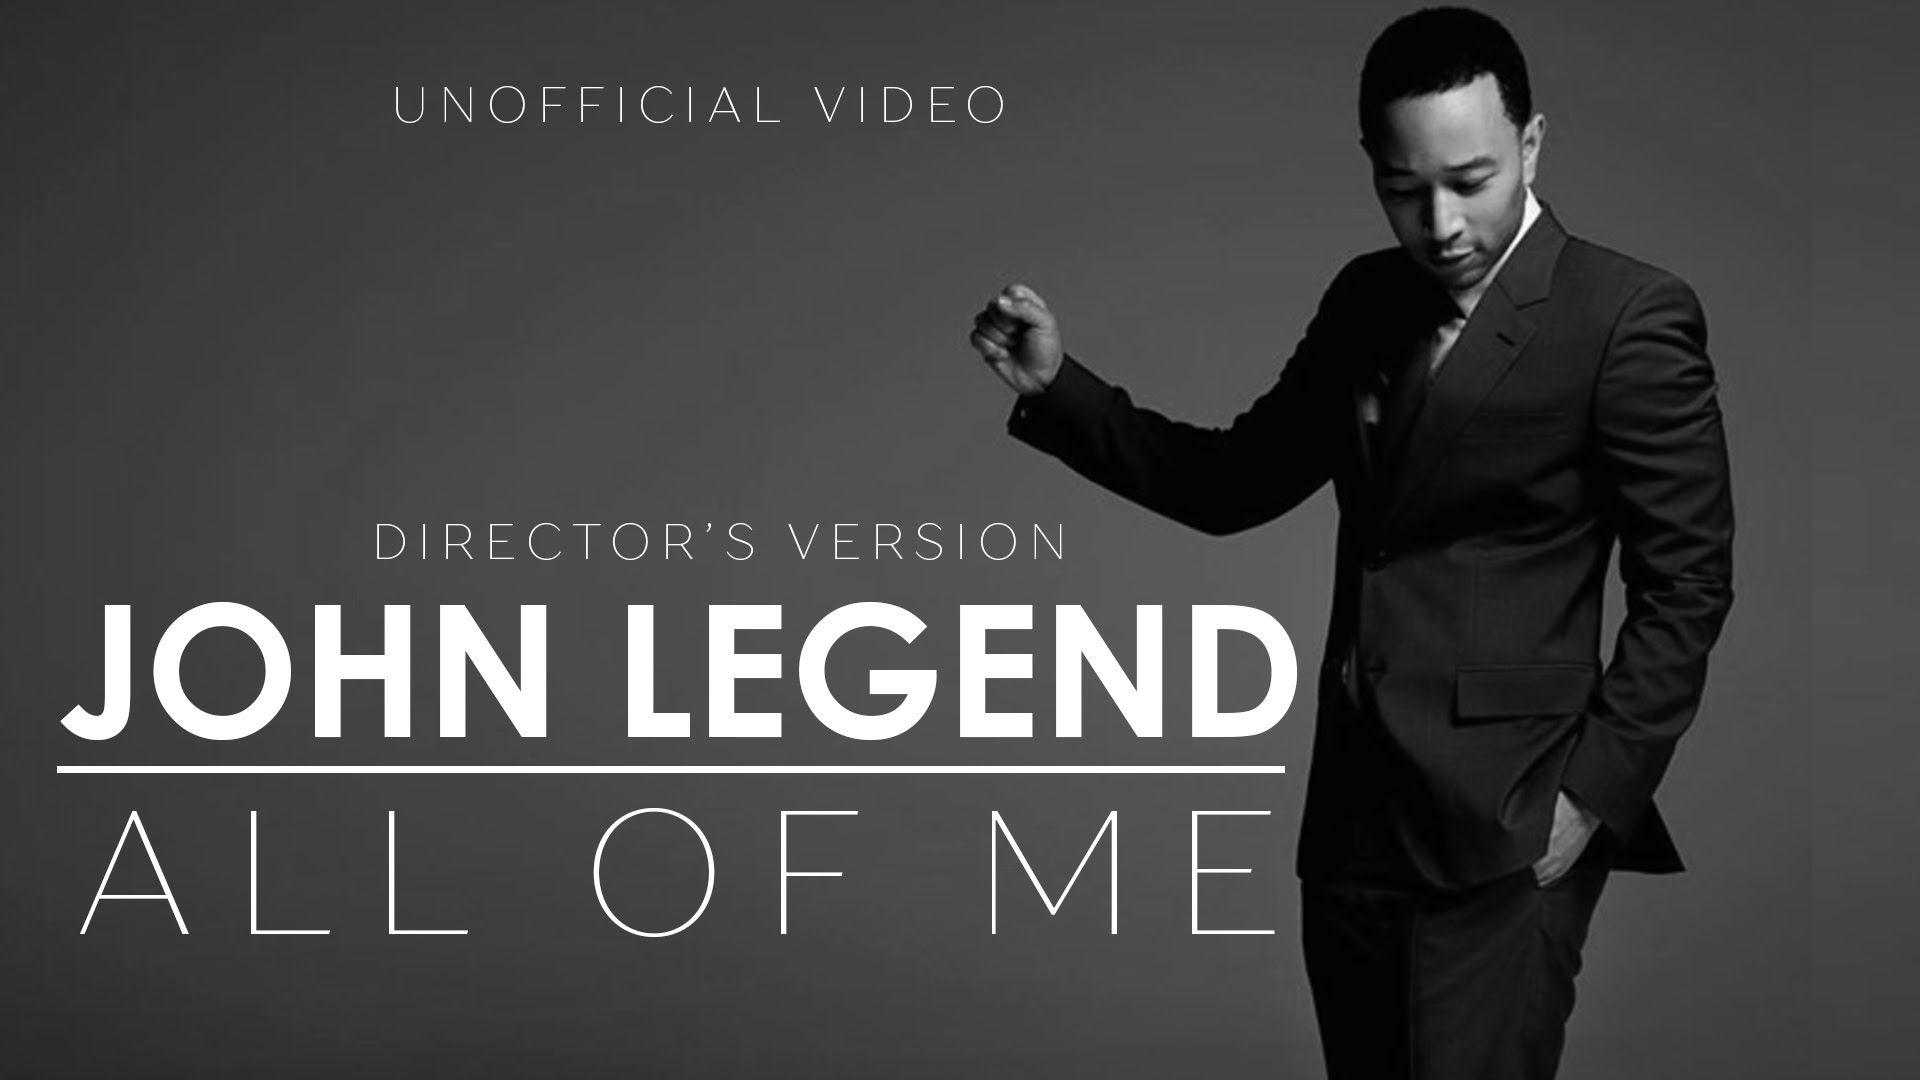 John Legend Of Me (Director's version)